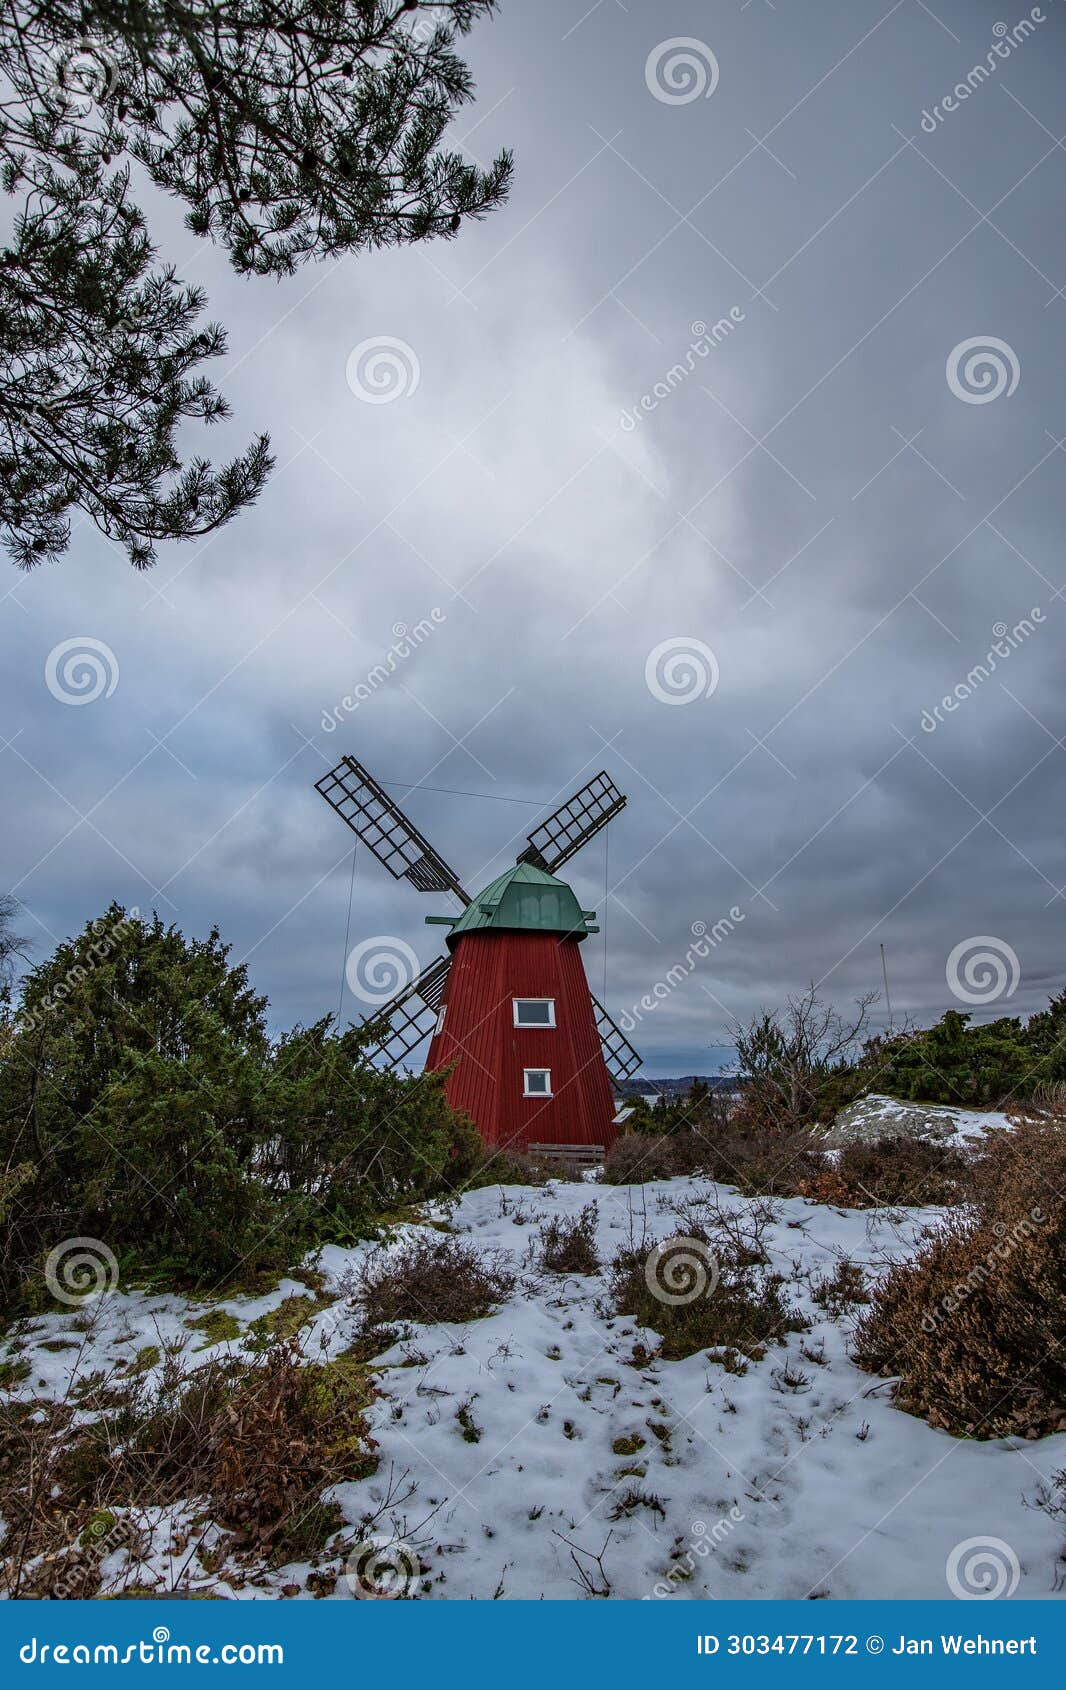 historical windmill made of red wood in a winter landscape.stenungsund in sweden